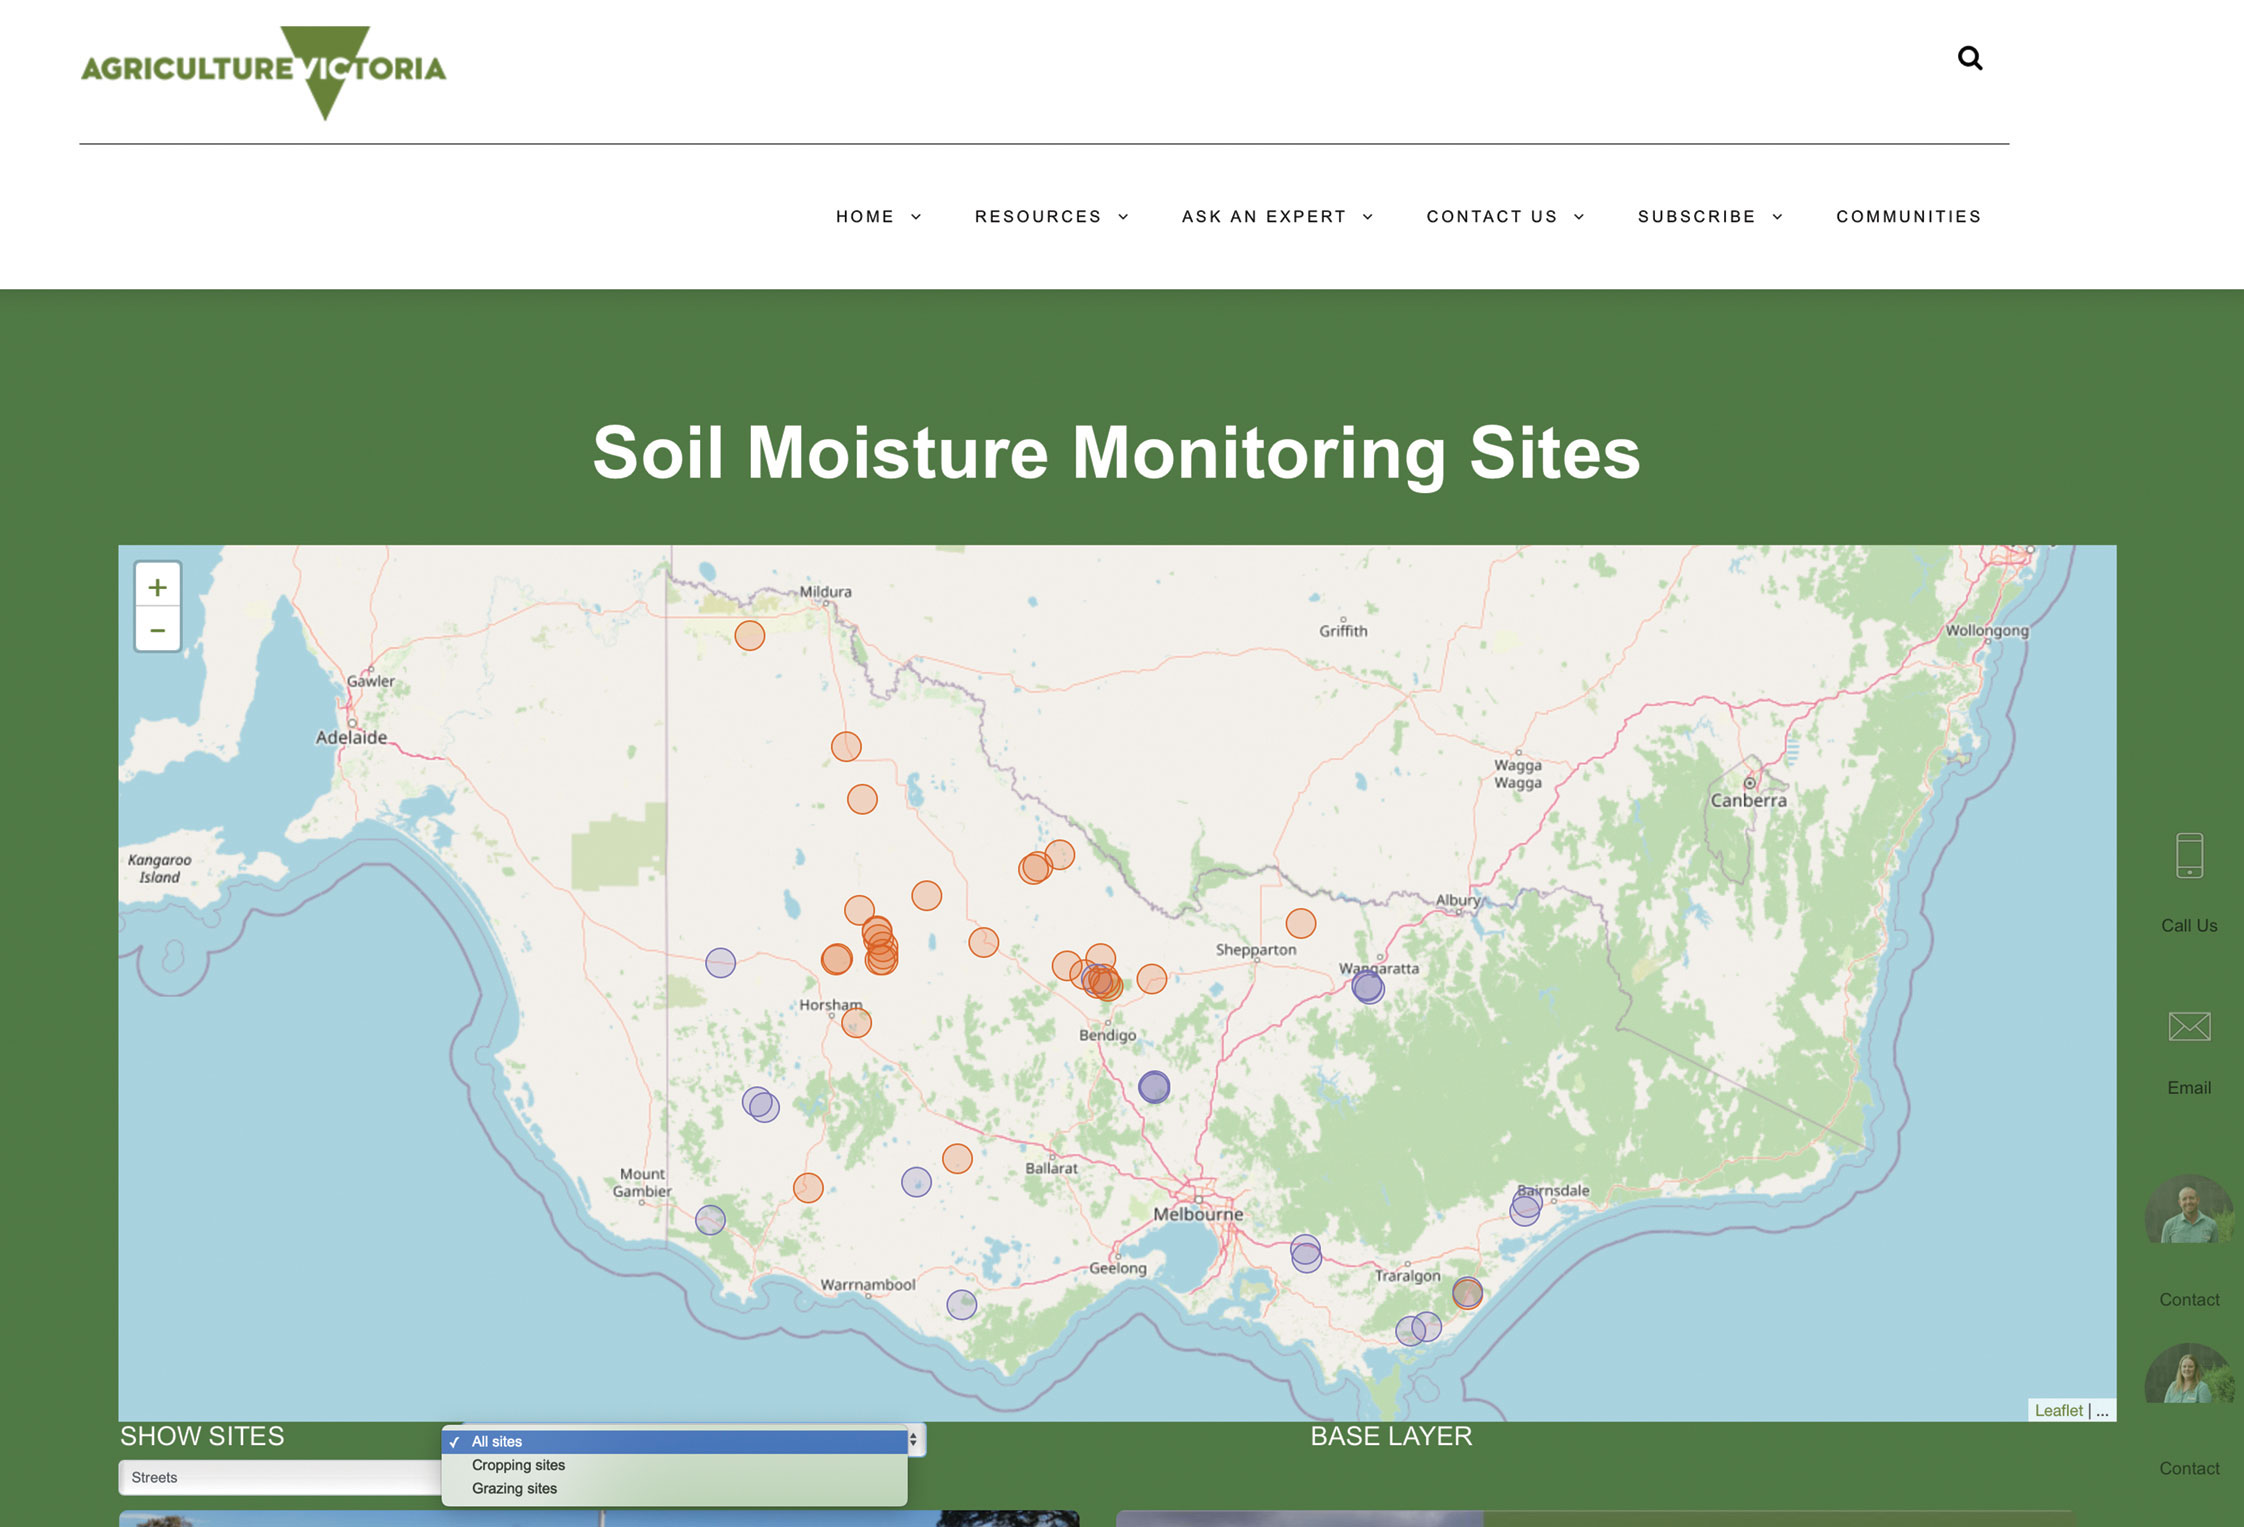 Soil moisture monitoring sites across Victoria